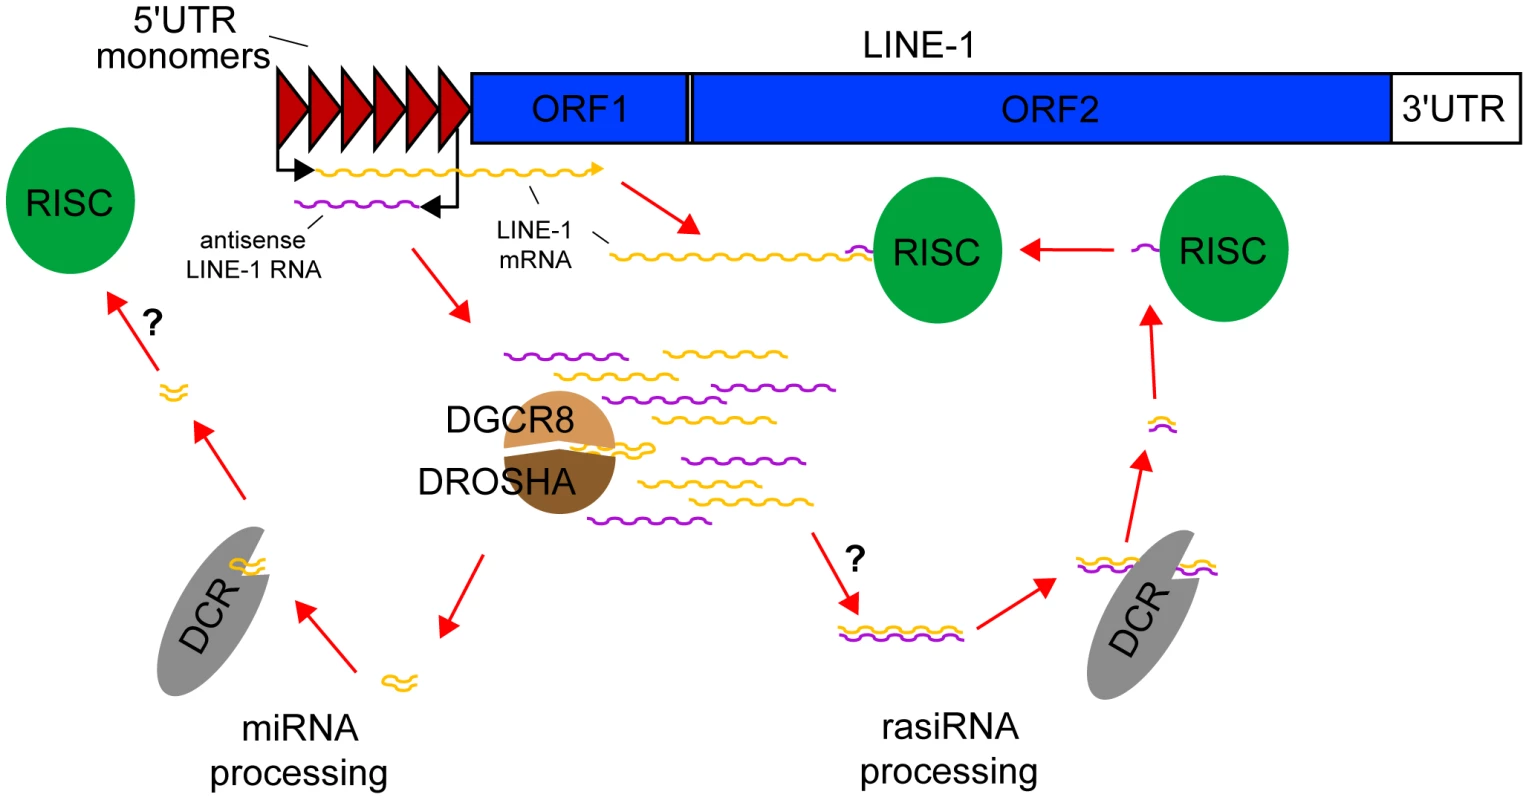 rasiRNAs inhibit LINE-1 expression in mESCs.